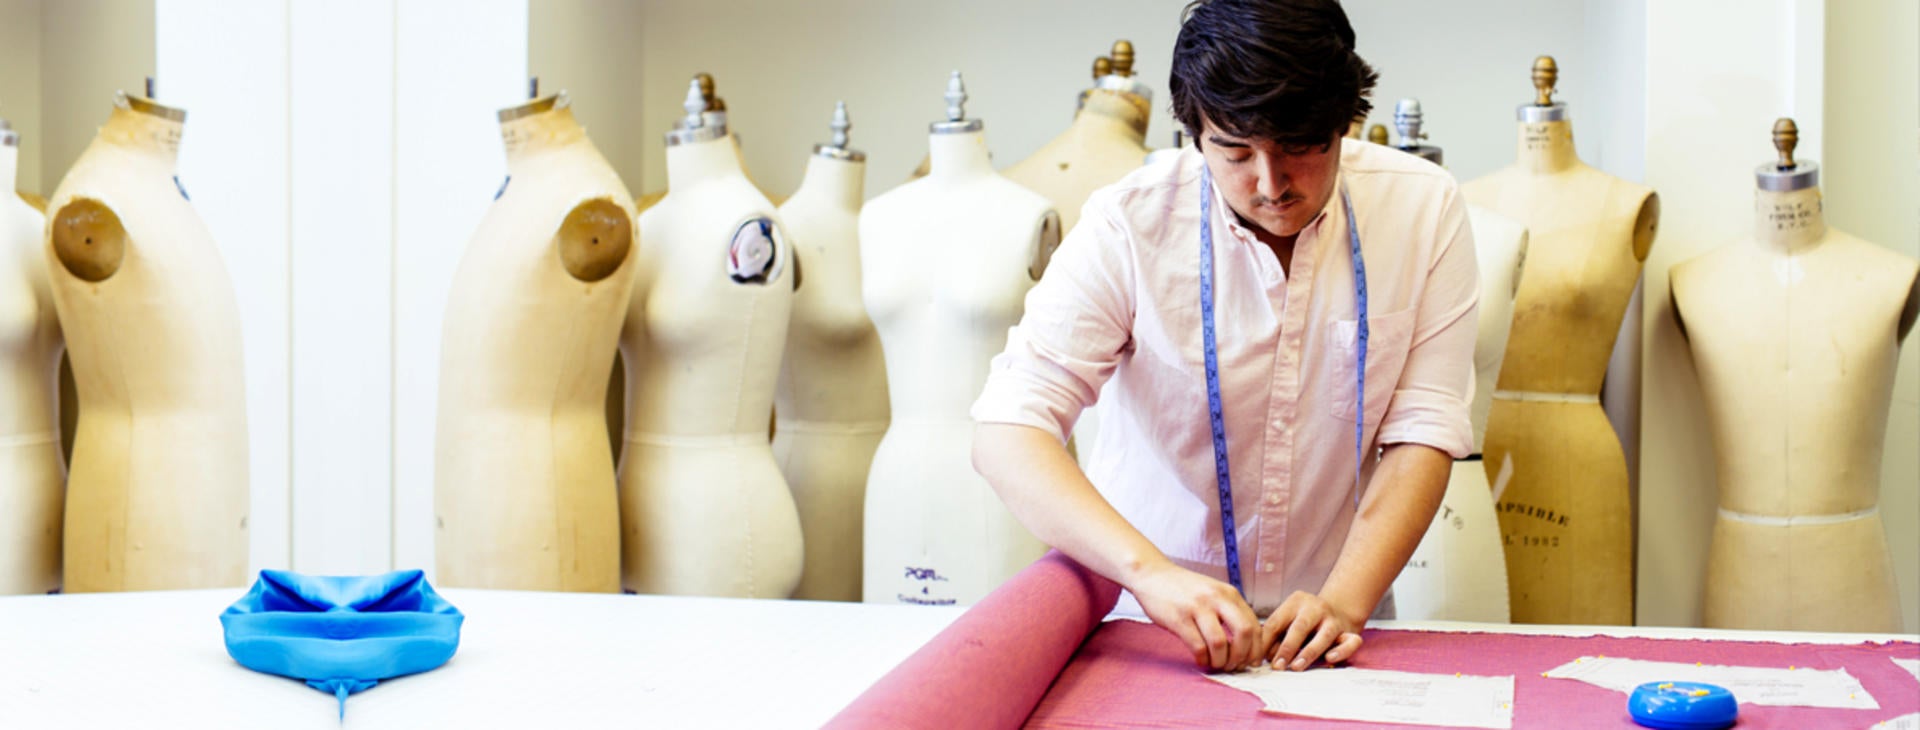 Student cutting fabric